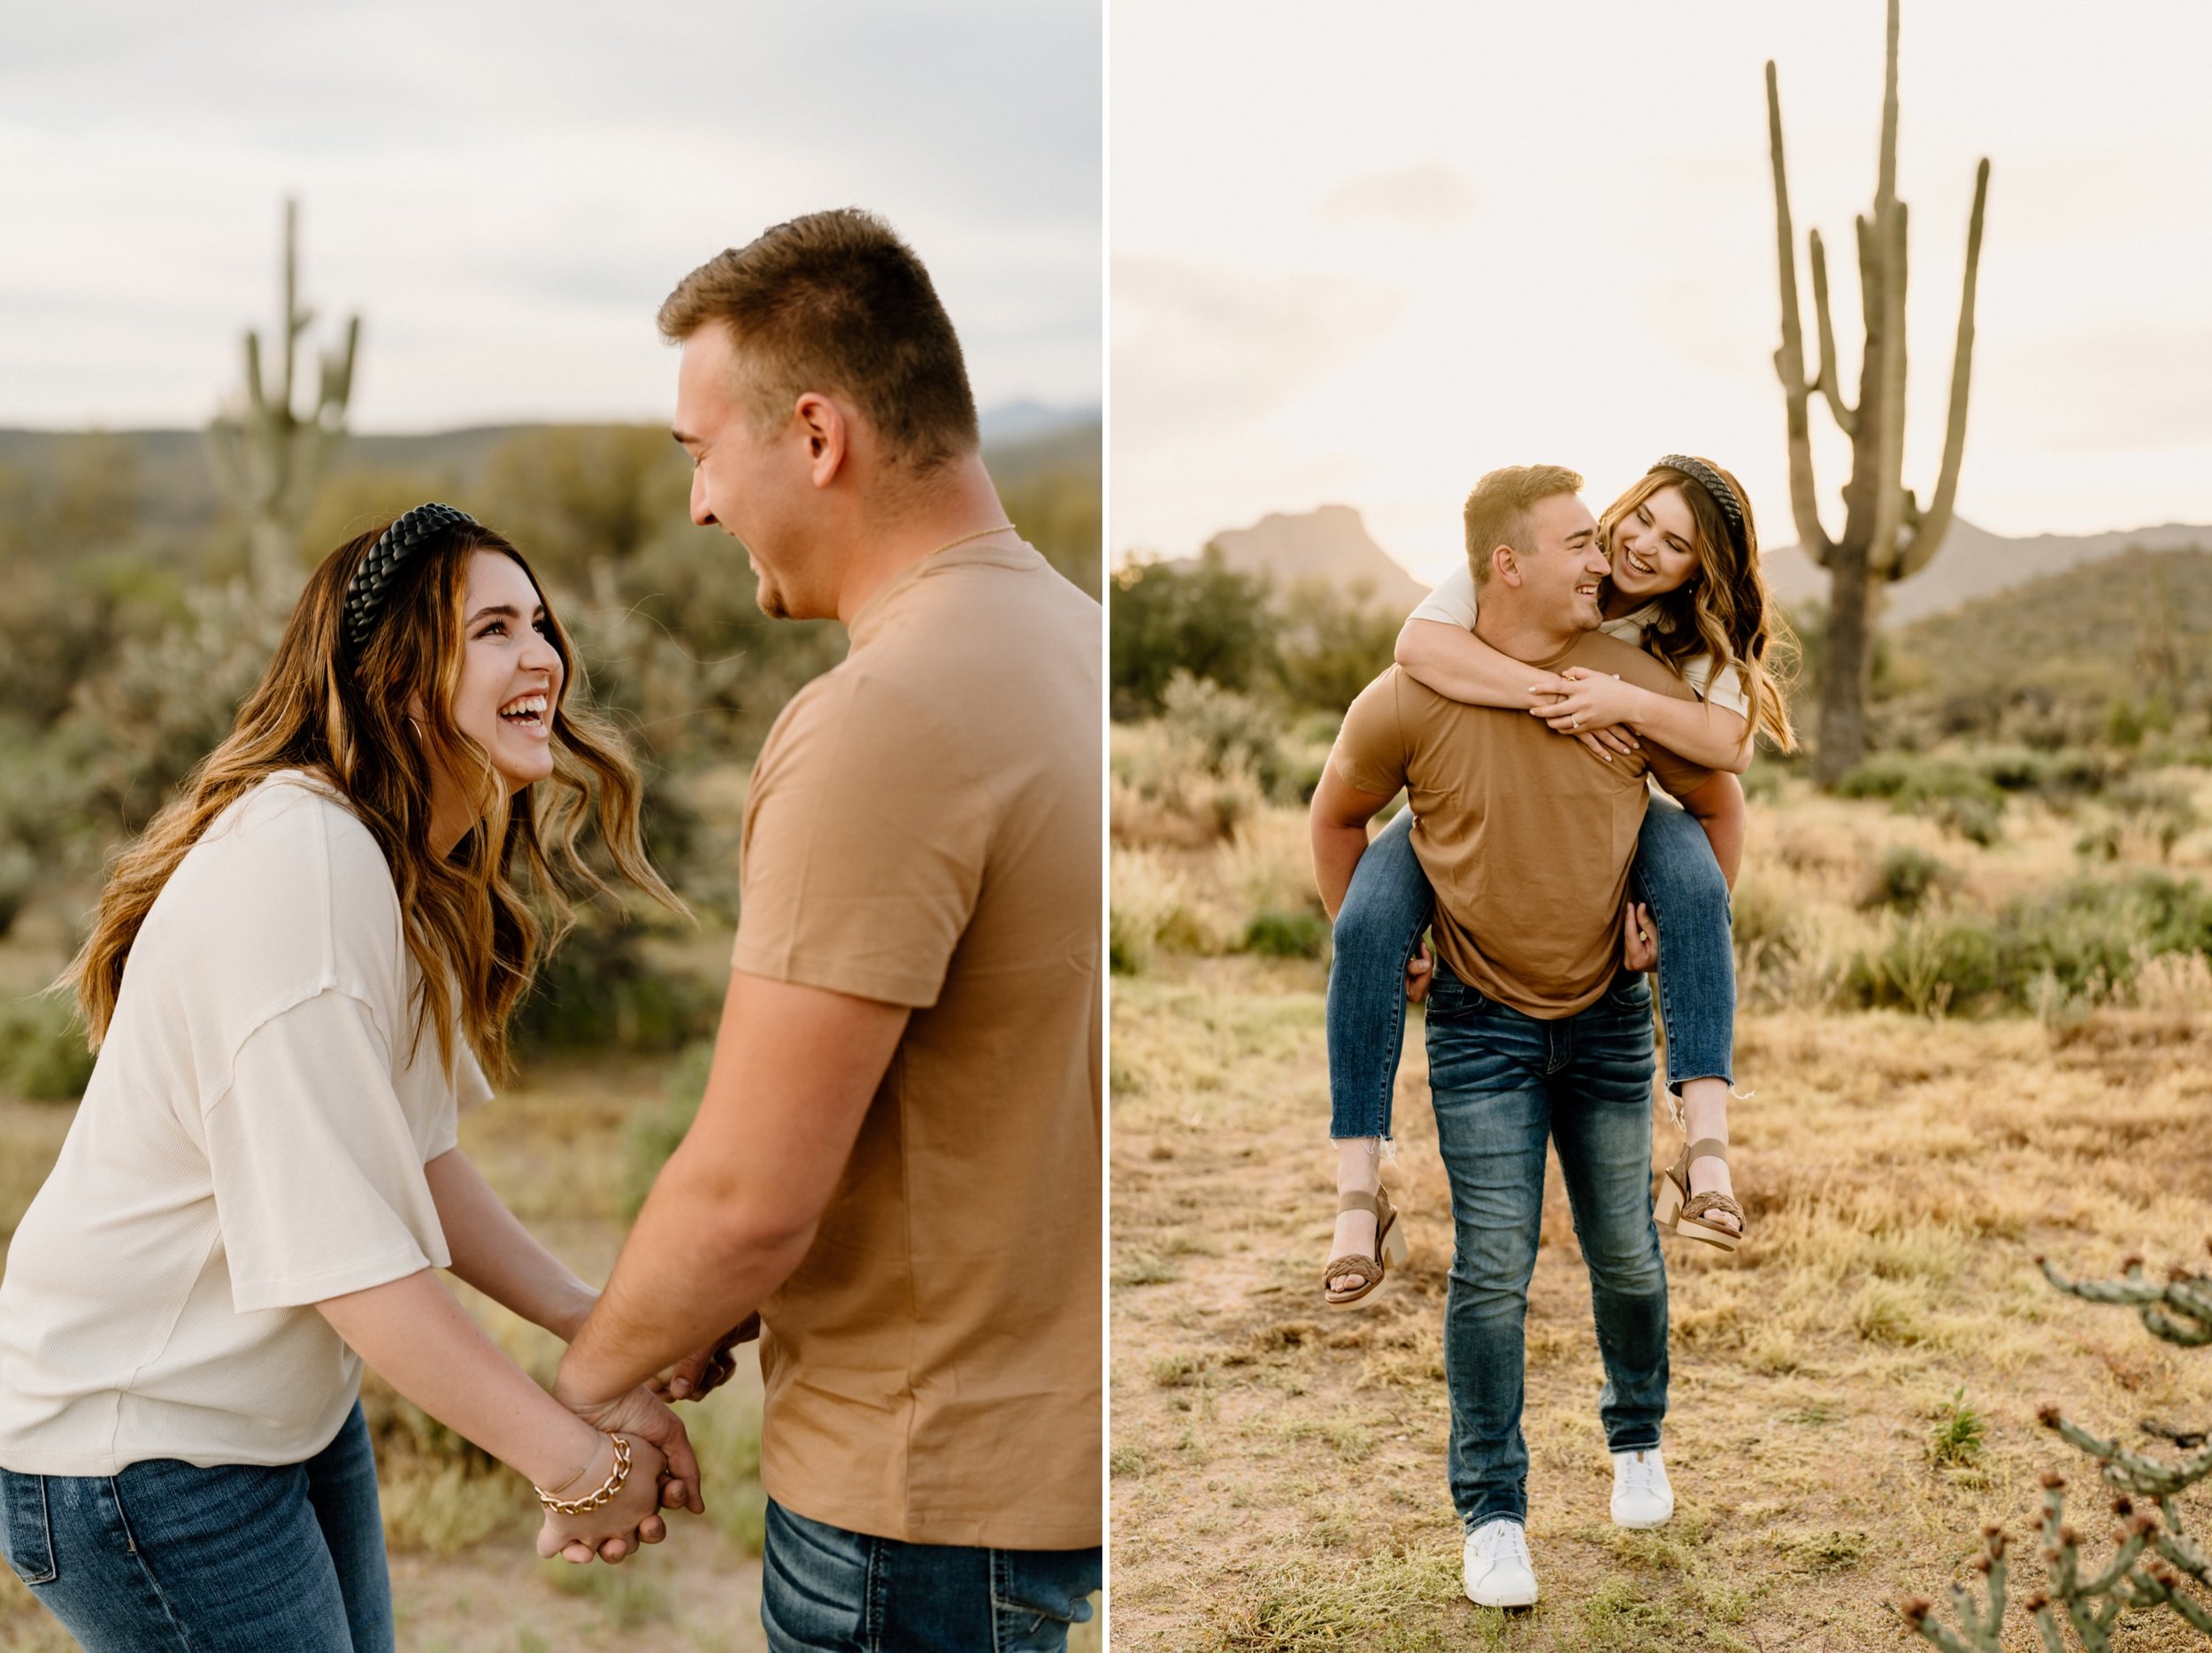 04_Engagement photos at Phon D Sutton in Mesa, Arizona..jpg